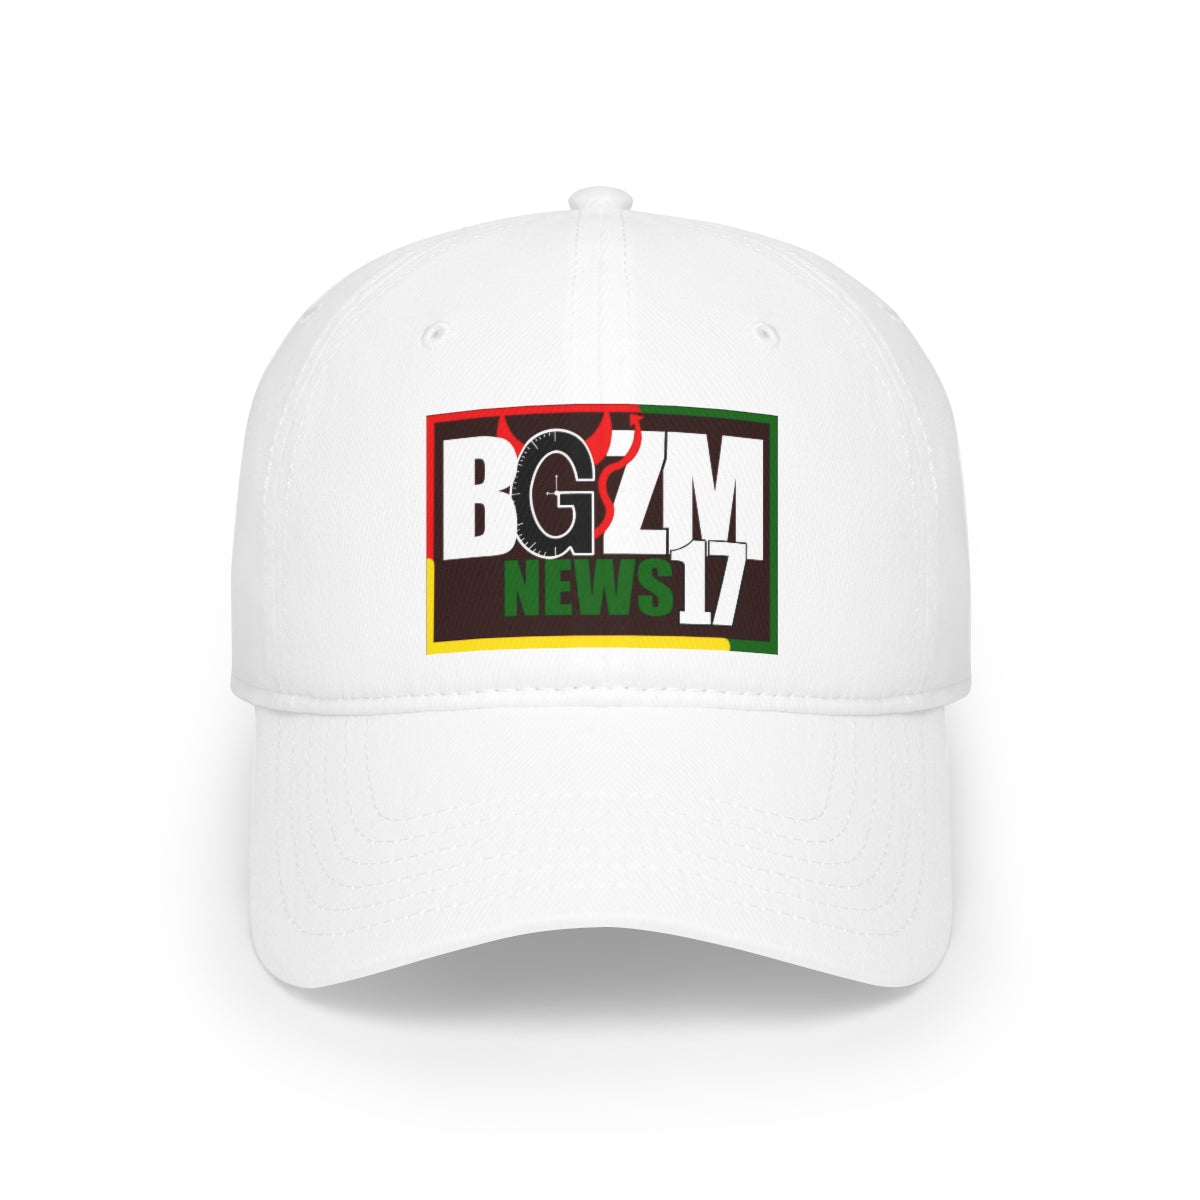 BGZM News 17 Dad Hat